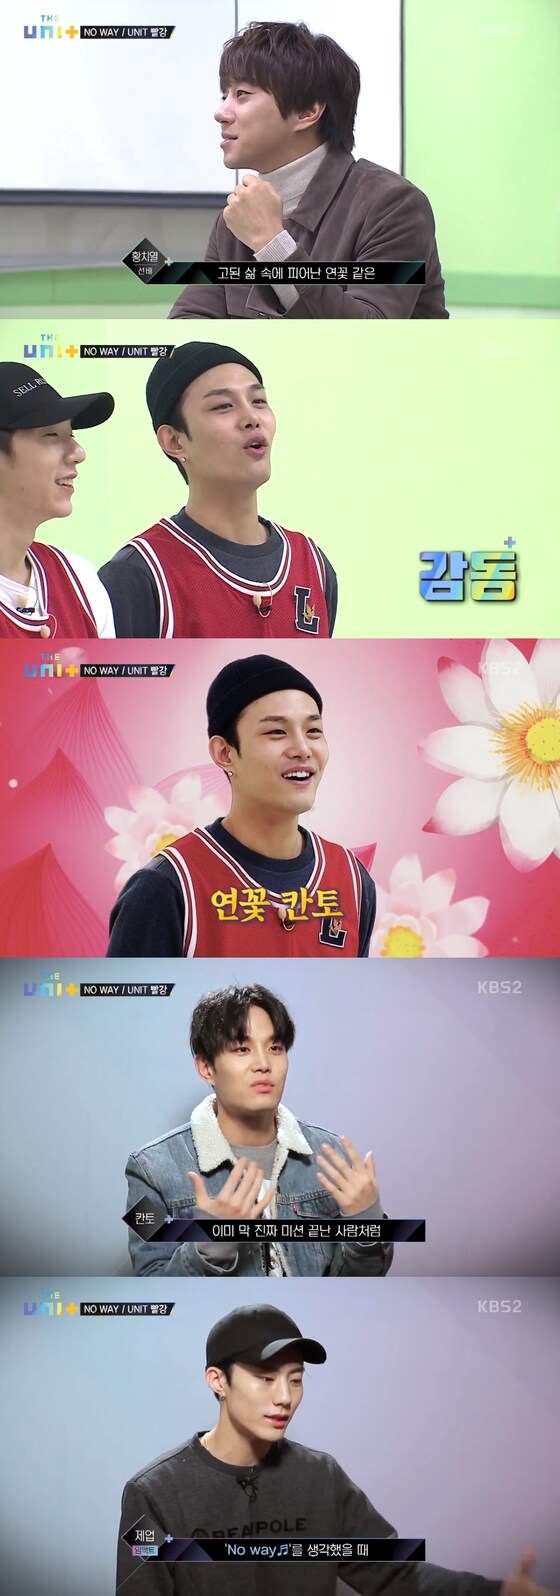 KBS2 '아이돌 리부팅 프로젝트 더유닛' 캡처© News1